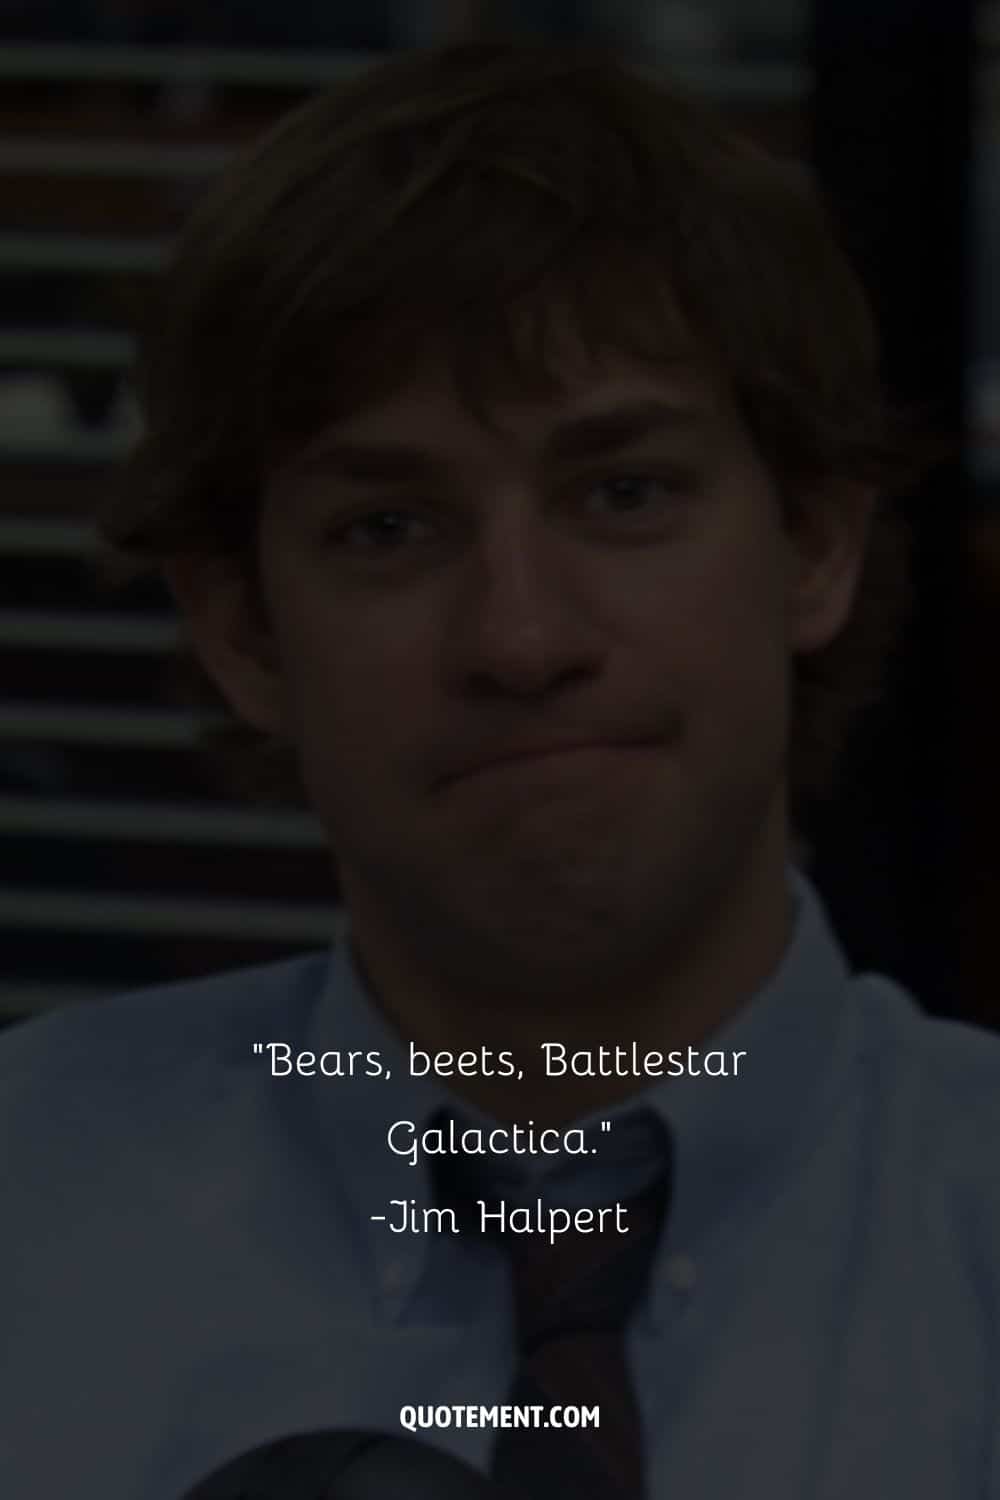 Bears, beets, Battlestar Galactica